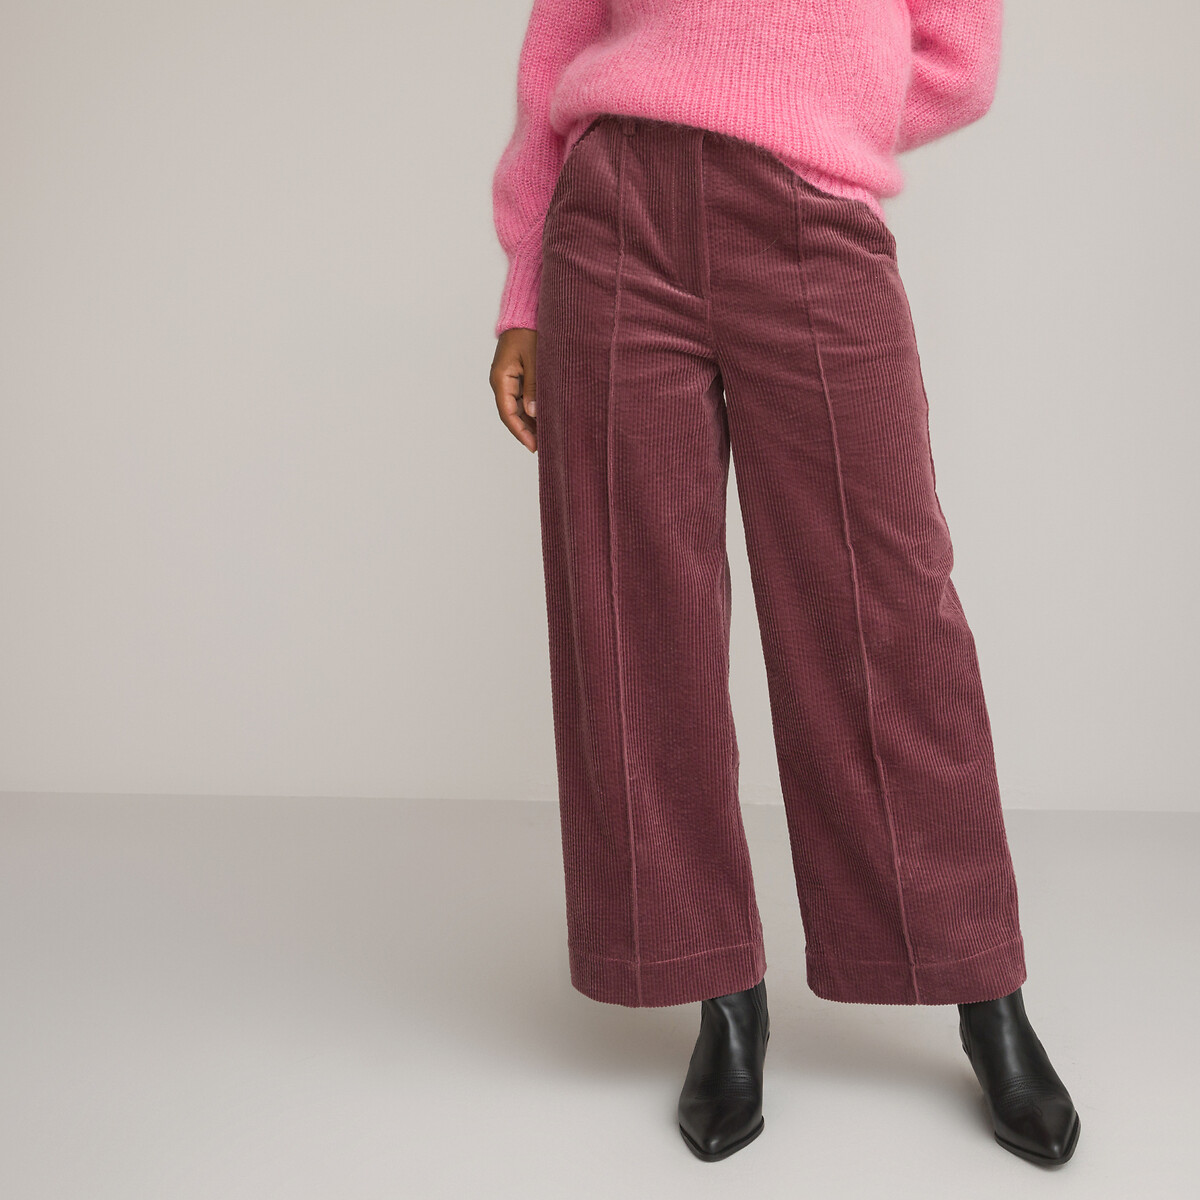 Corduroy wide leg trousers, length 26.5